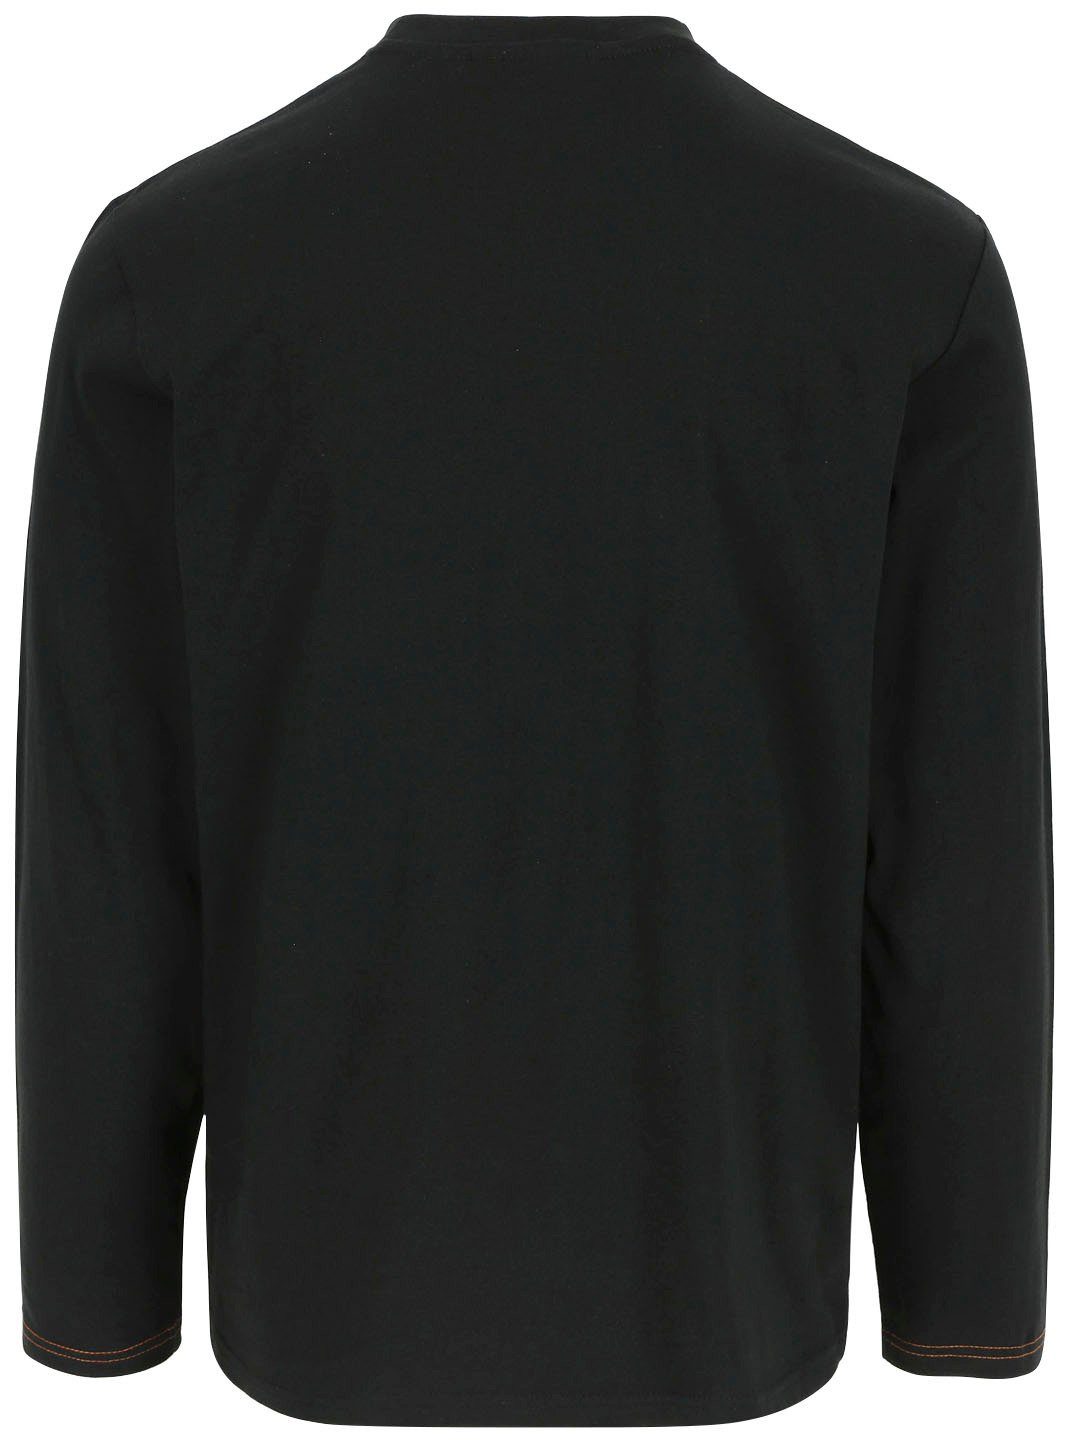 Tragegefühl, Noet vorgeschrumpfte t-shirt Baumwolle, 100 Herock Basic % schwarz langärmlig Langarmshirt angenehmes